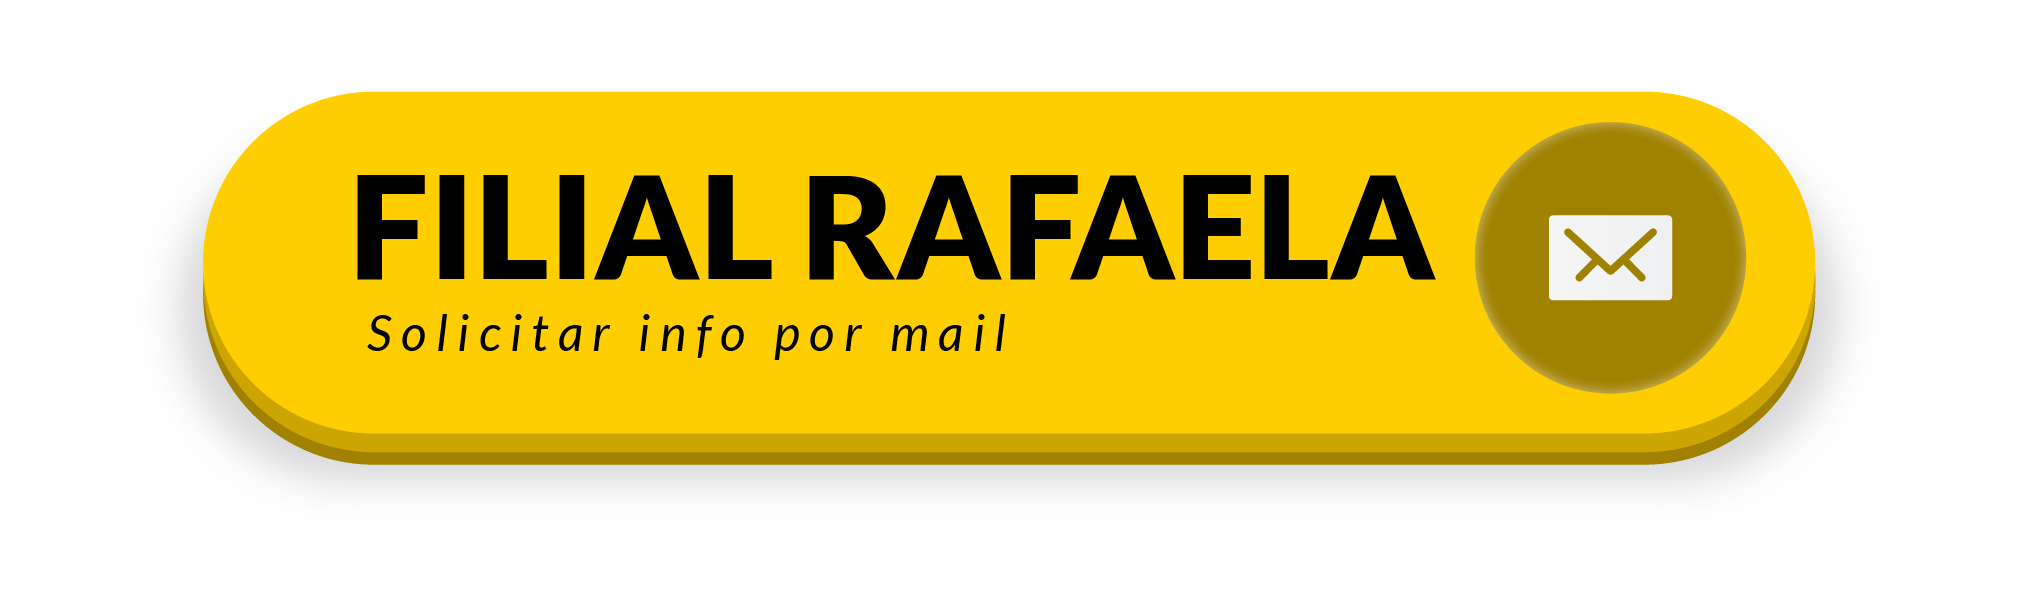 Filial Rafaela - Solicitar info de préstamo Tremblay por mail - Mutual del Club Atlético Pilar-01-01